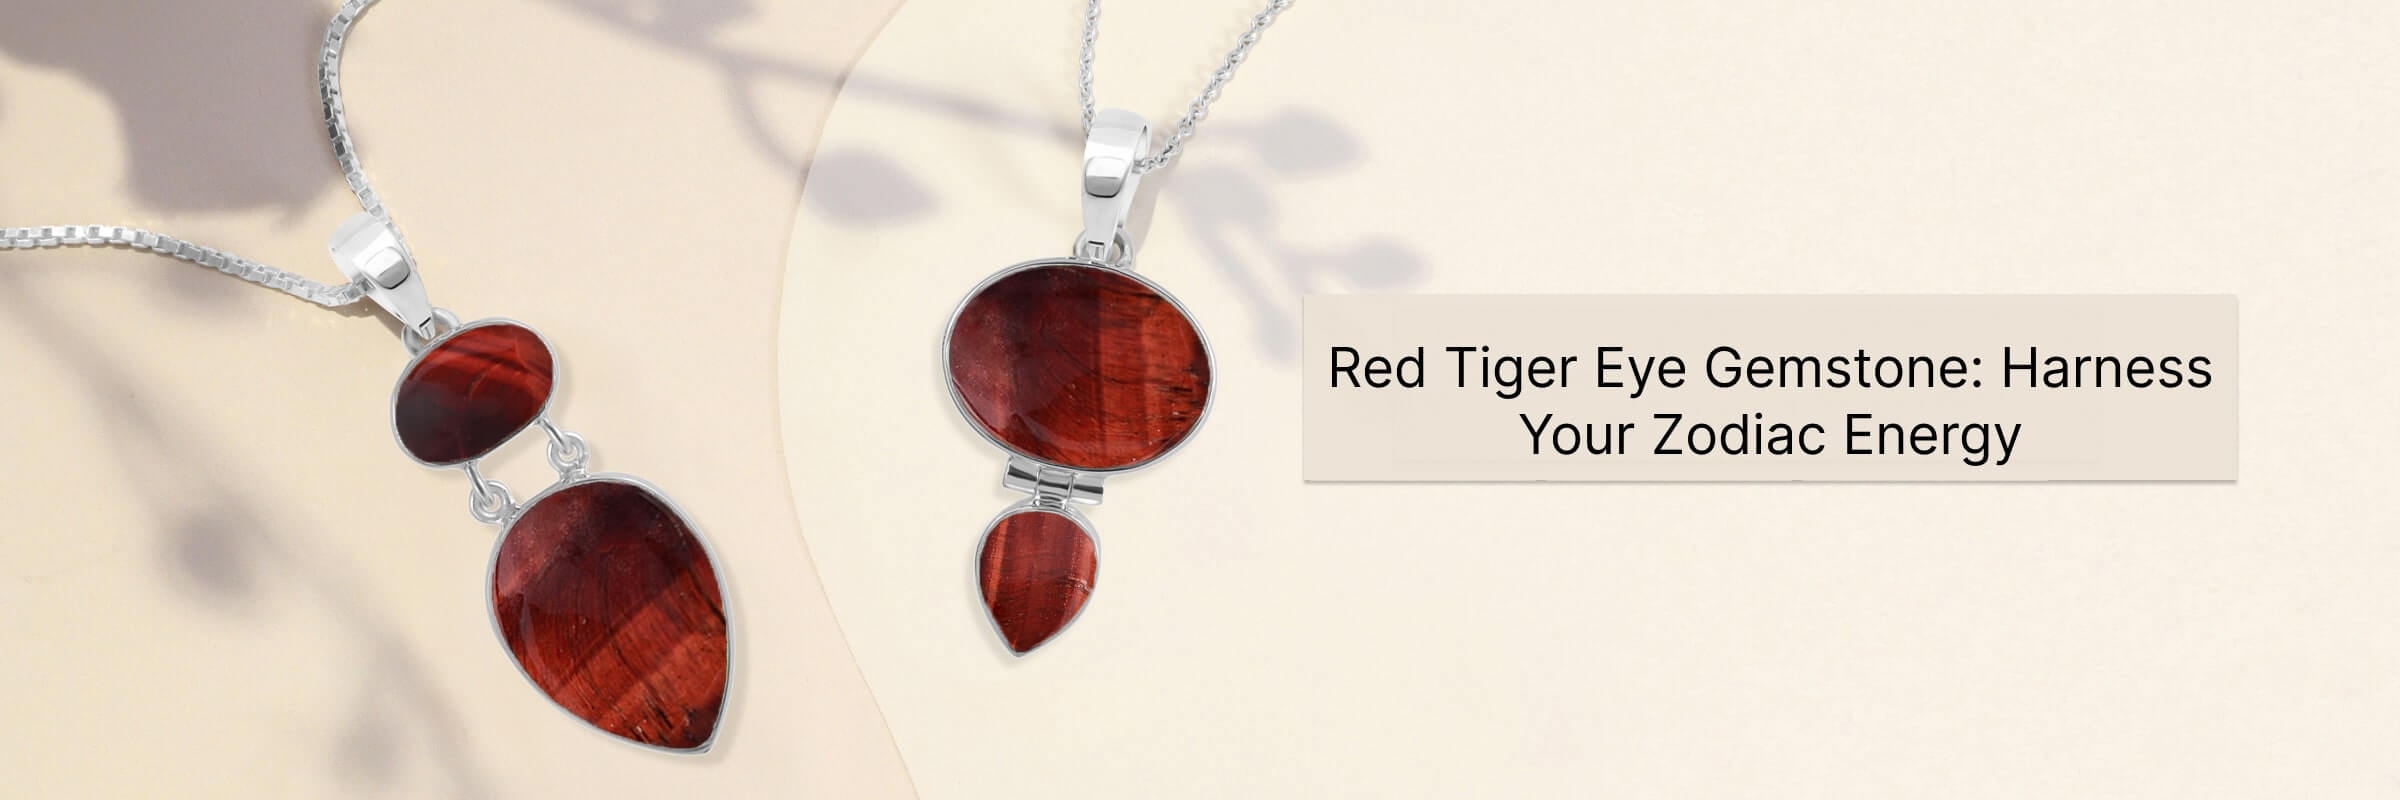 Red Tiger Eye Zodiac Sign Association